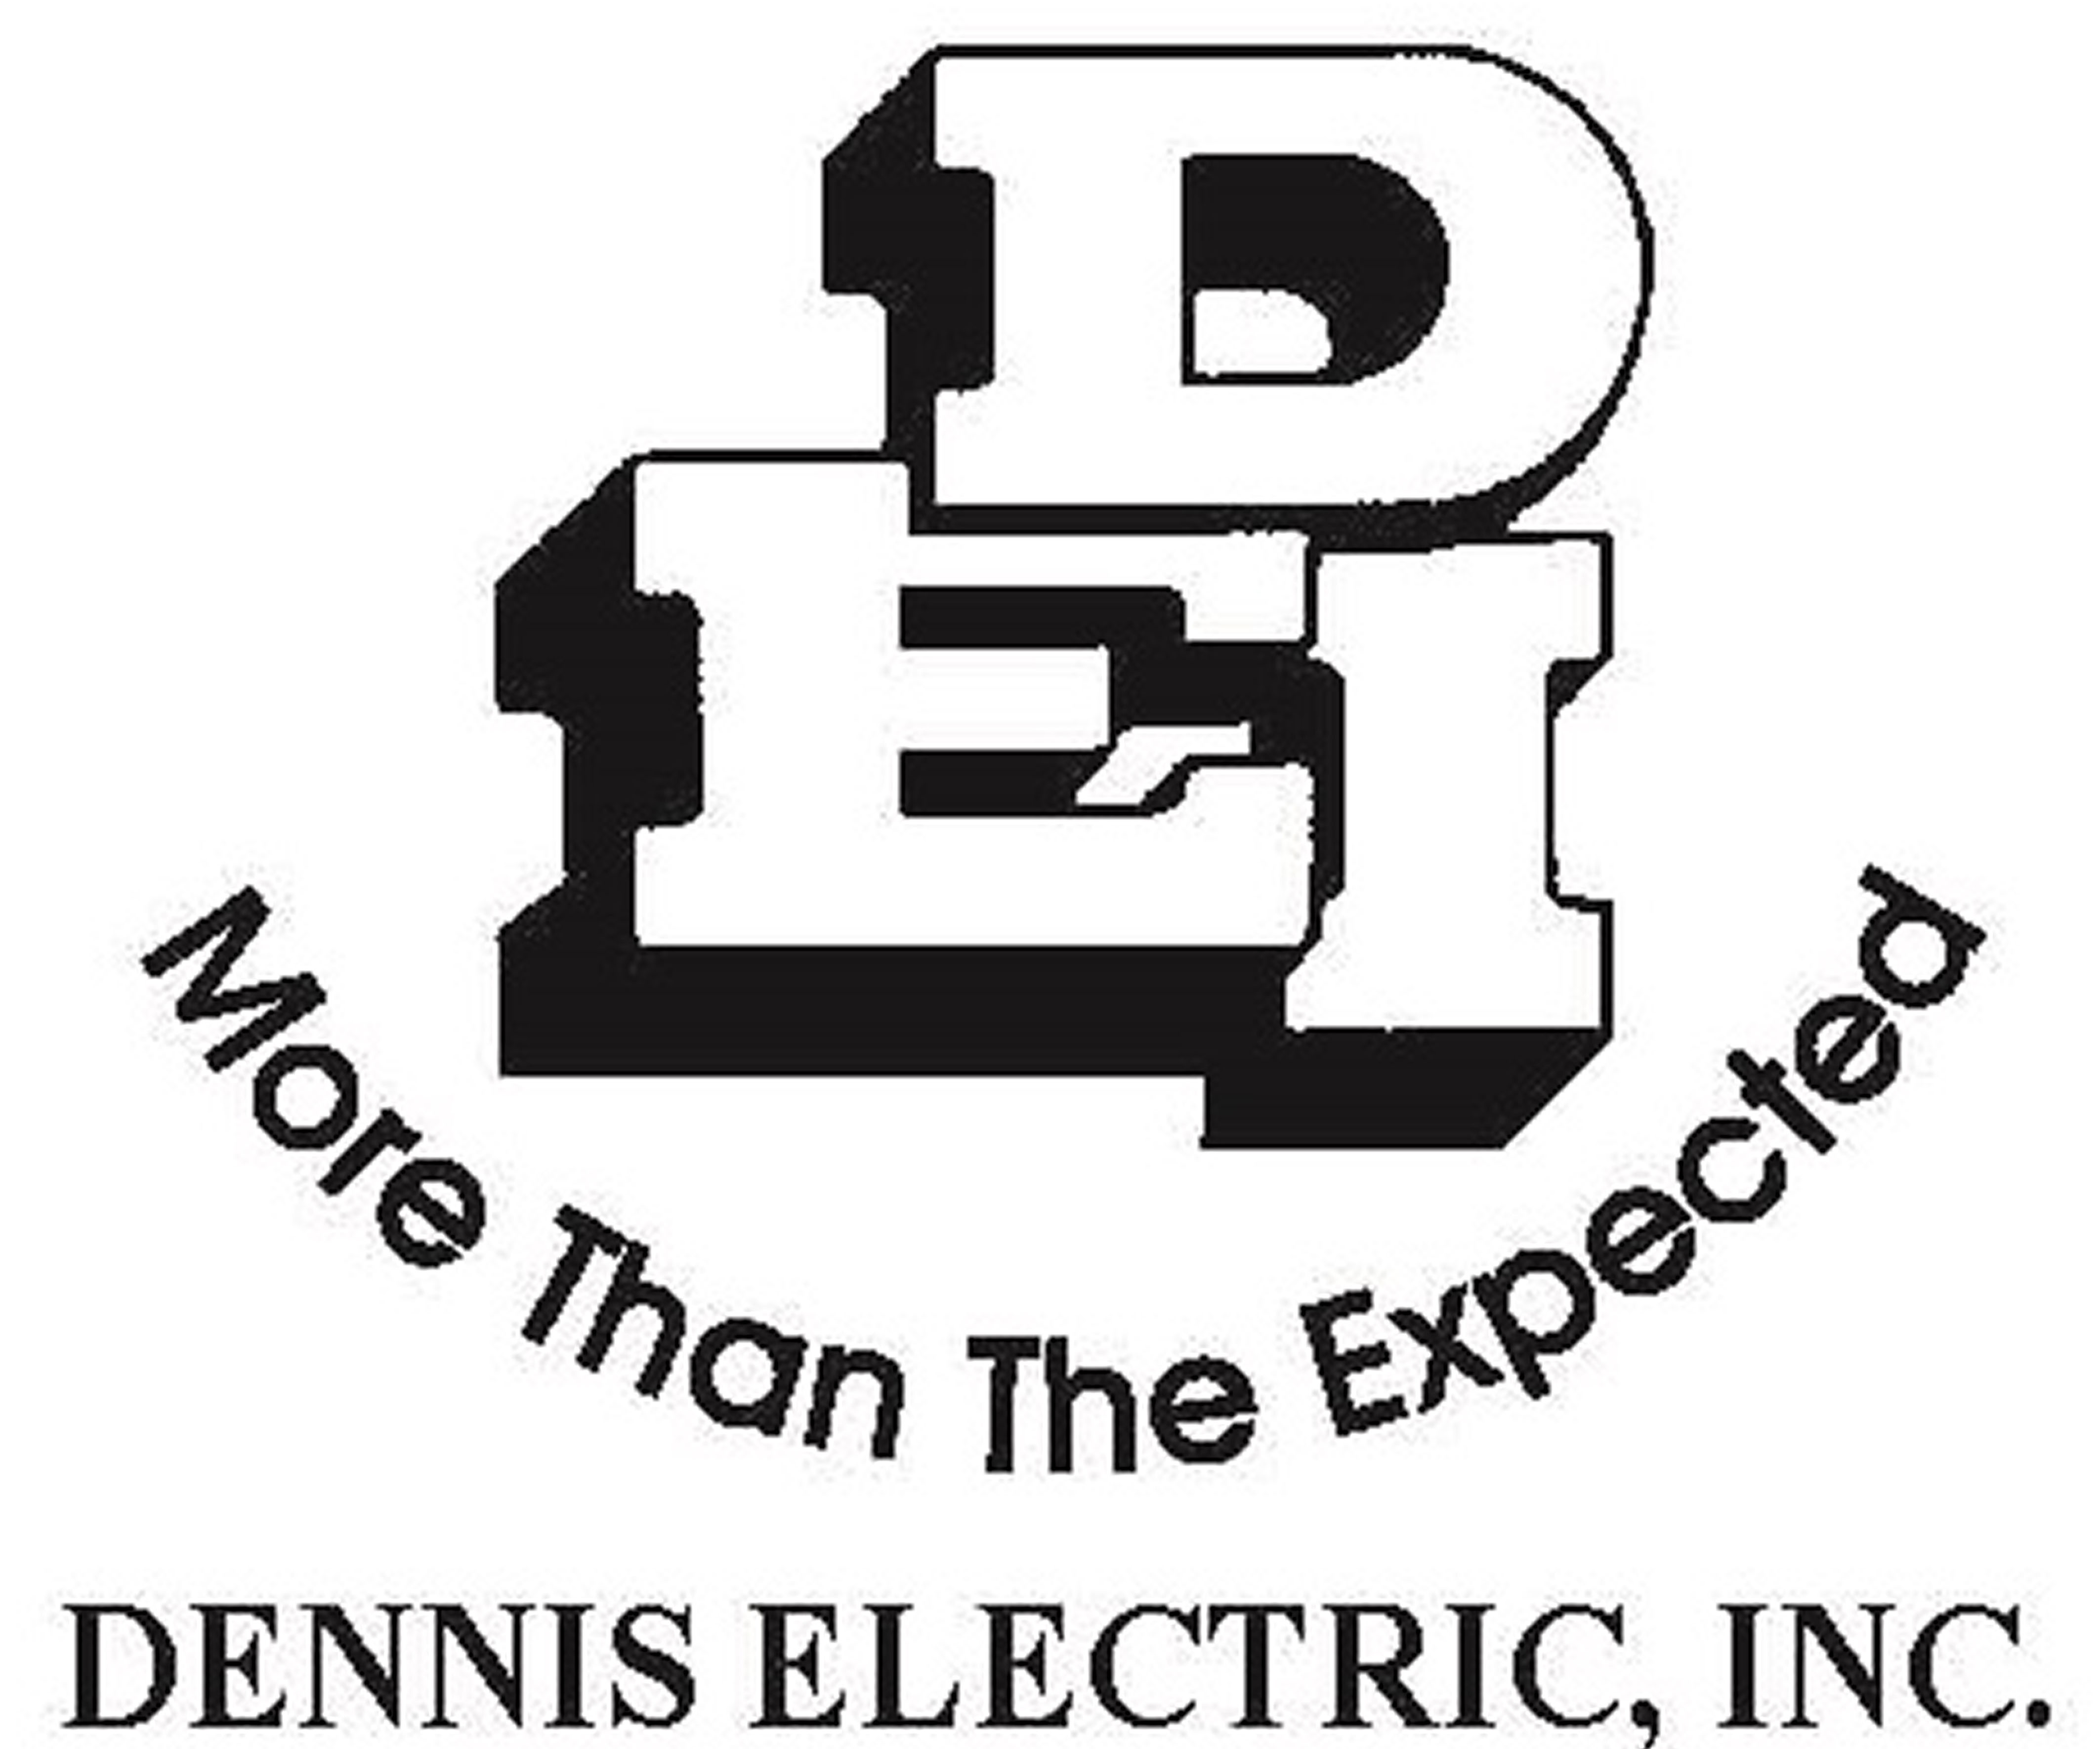 Dennis Electric logo